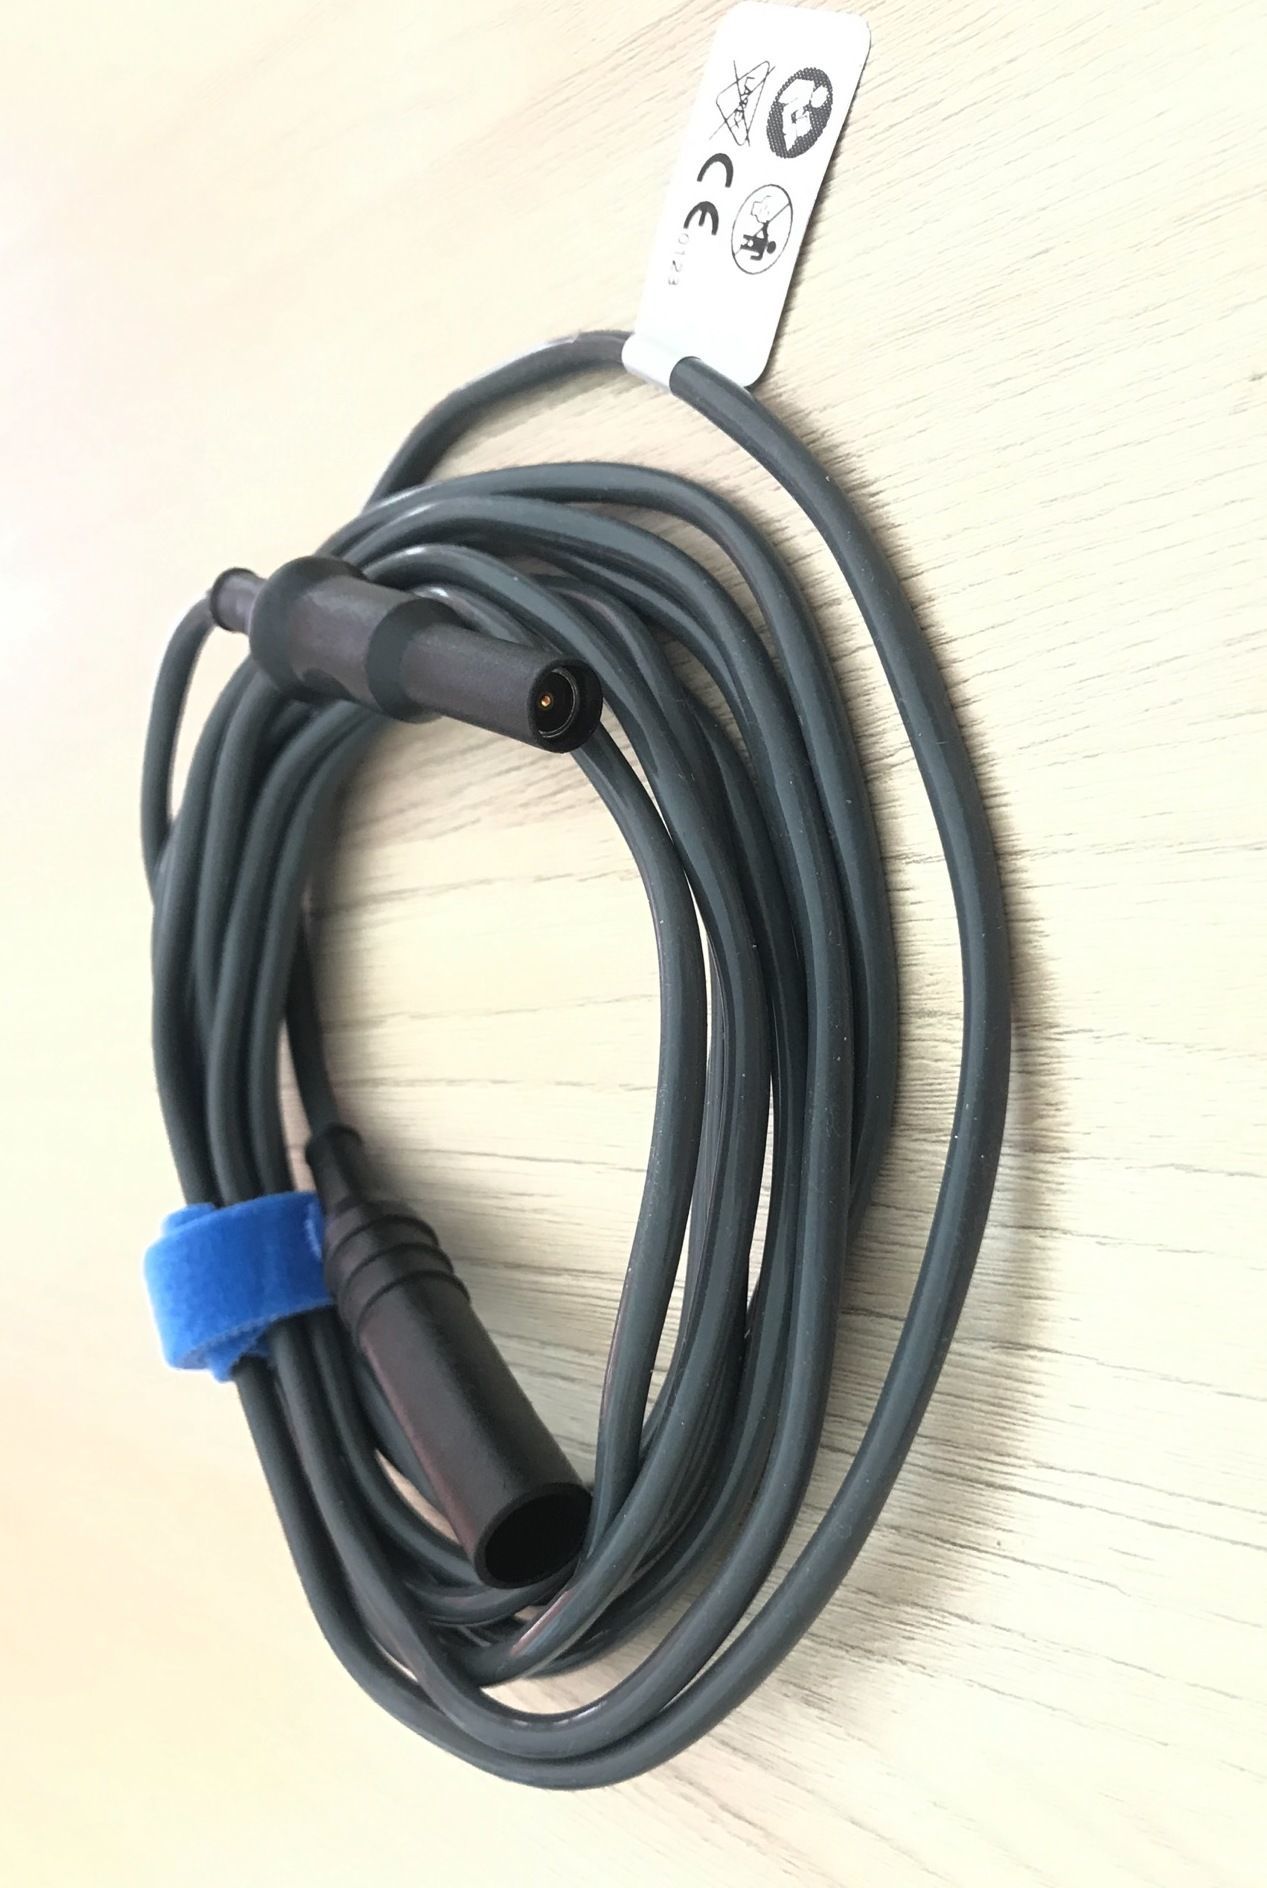 ESU Bipolar forceps cable Euro type with 2 mm connector for Bertchtold & KLS Martin _สายด้ามจี้ไบโพล่าร์ สายเคเบิ้ลไบโพล่าร์แบบข้อต่อเสียบด้ามมาตรฐานยุโรปสำหรับเครื่องจี้ผ่าตัดไฟฟ้า Bertchtold และ KLS